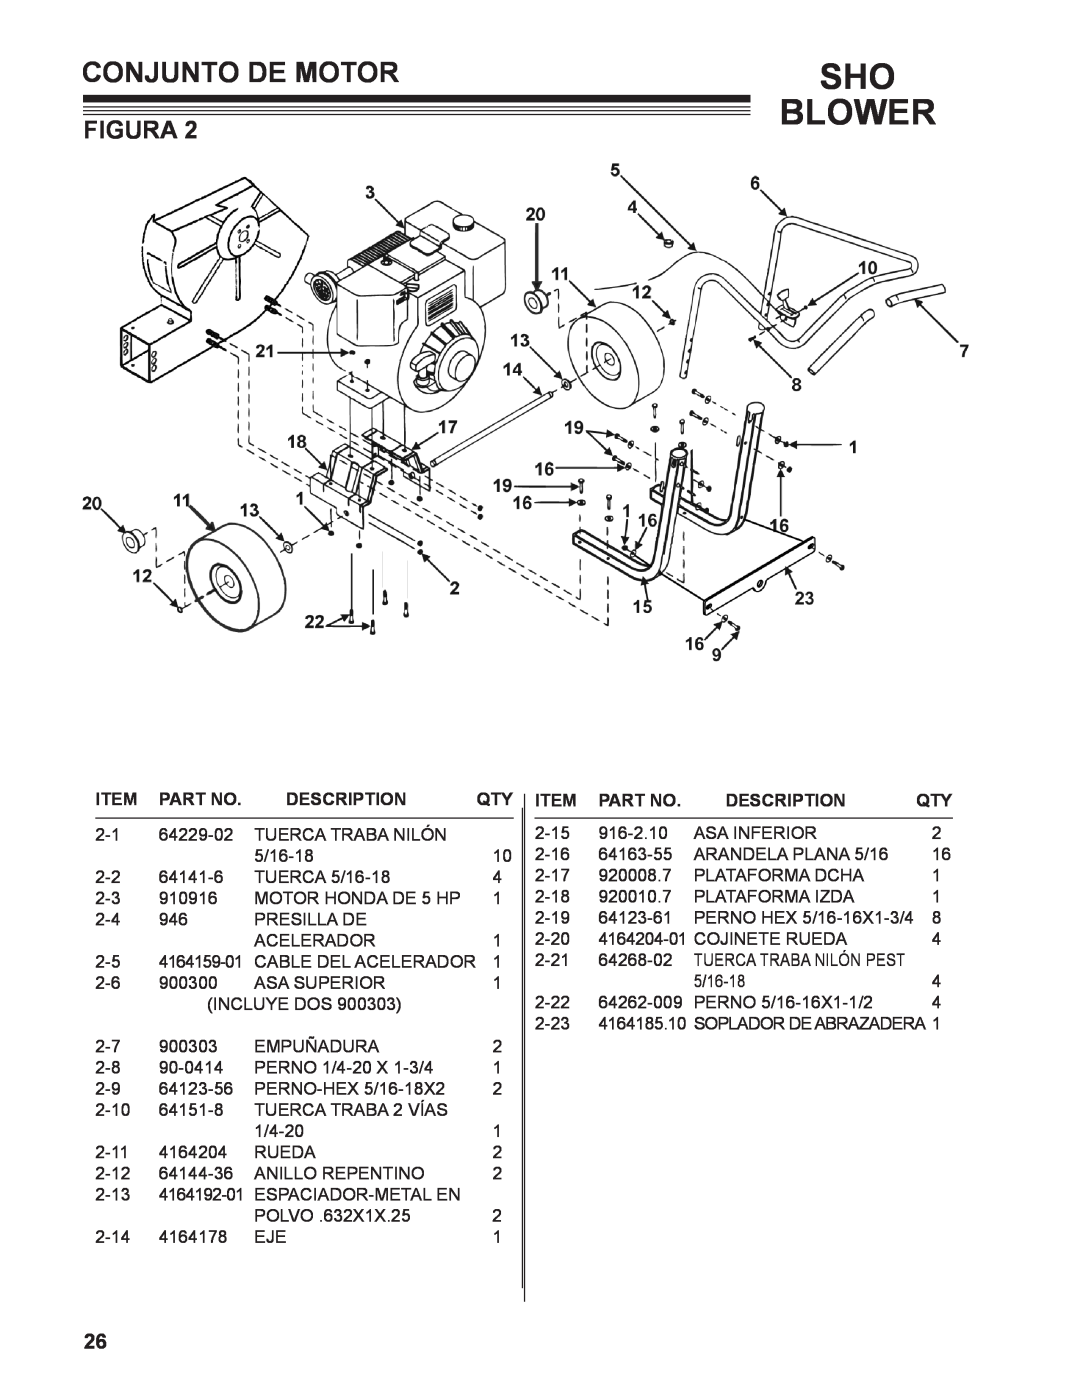 Little Wonder 9502-00-01 technical manual Conjunto De Motor, Sho Blower, Figura, Description 